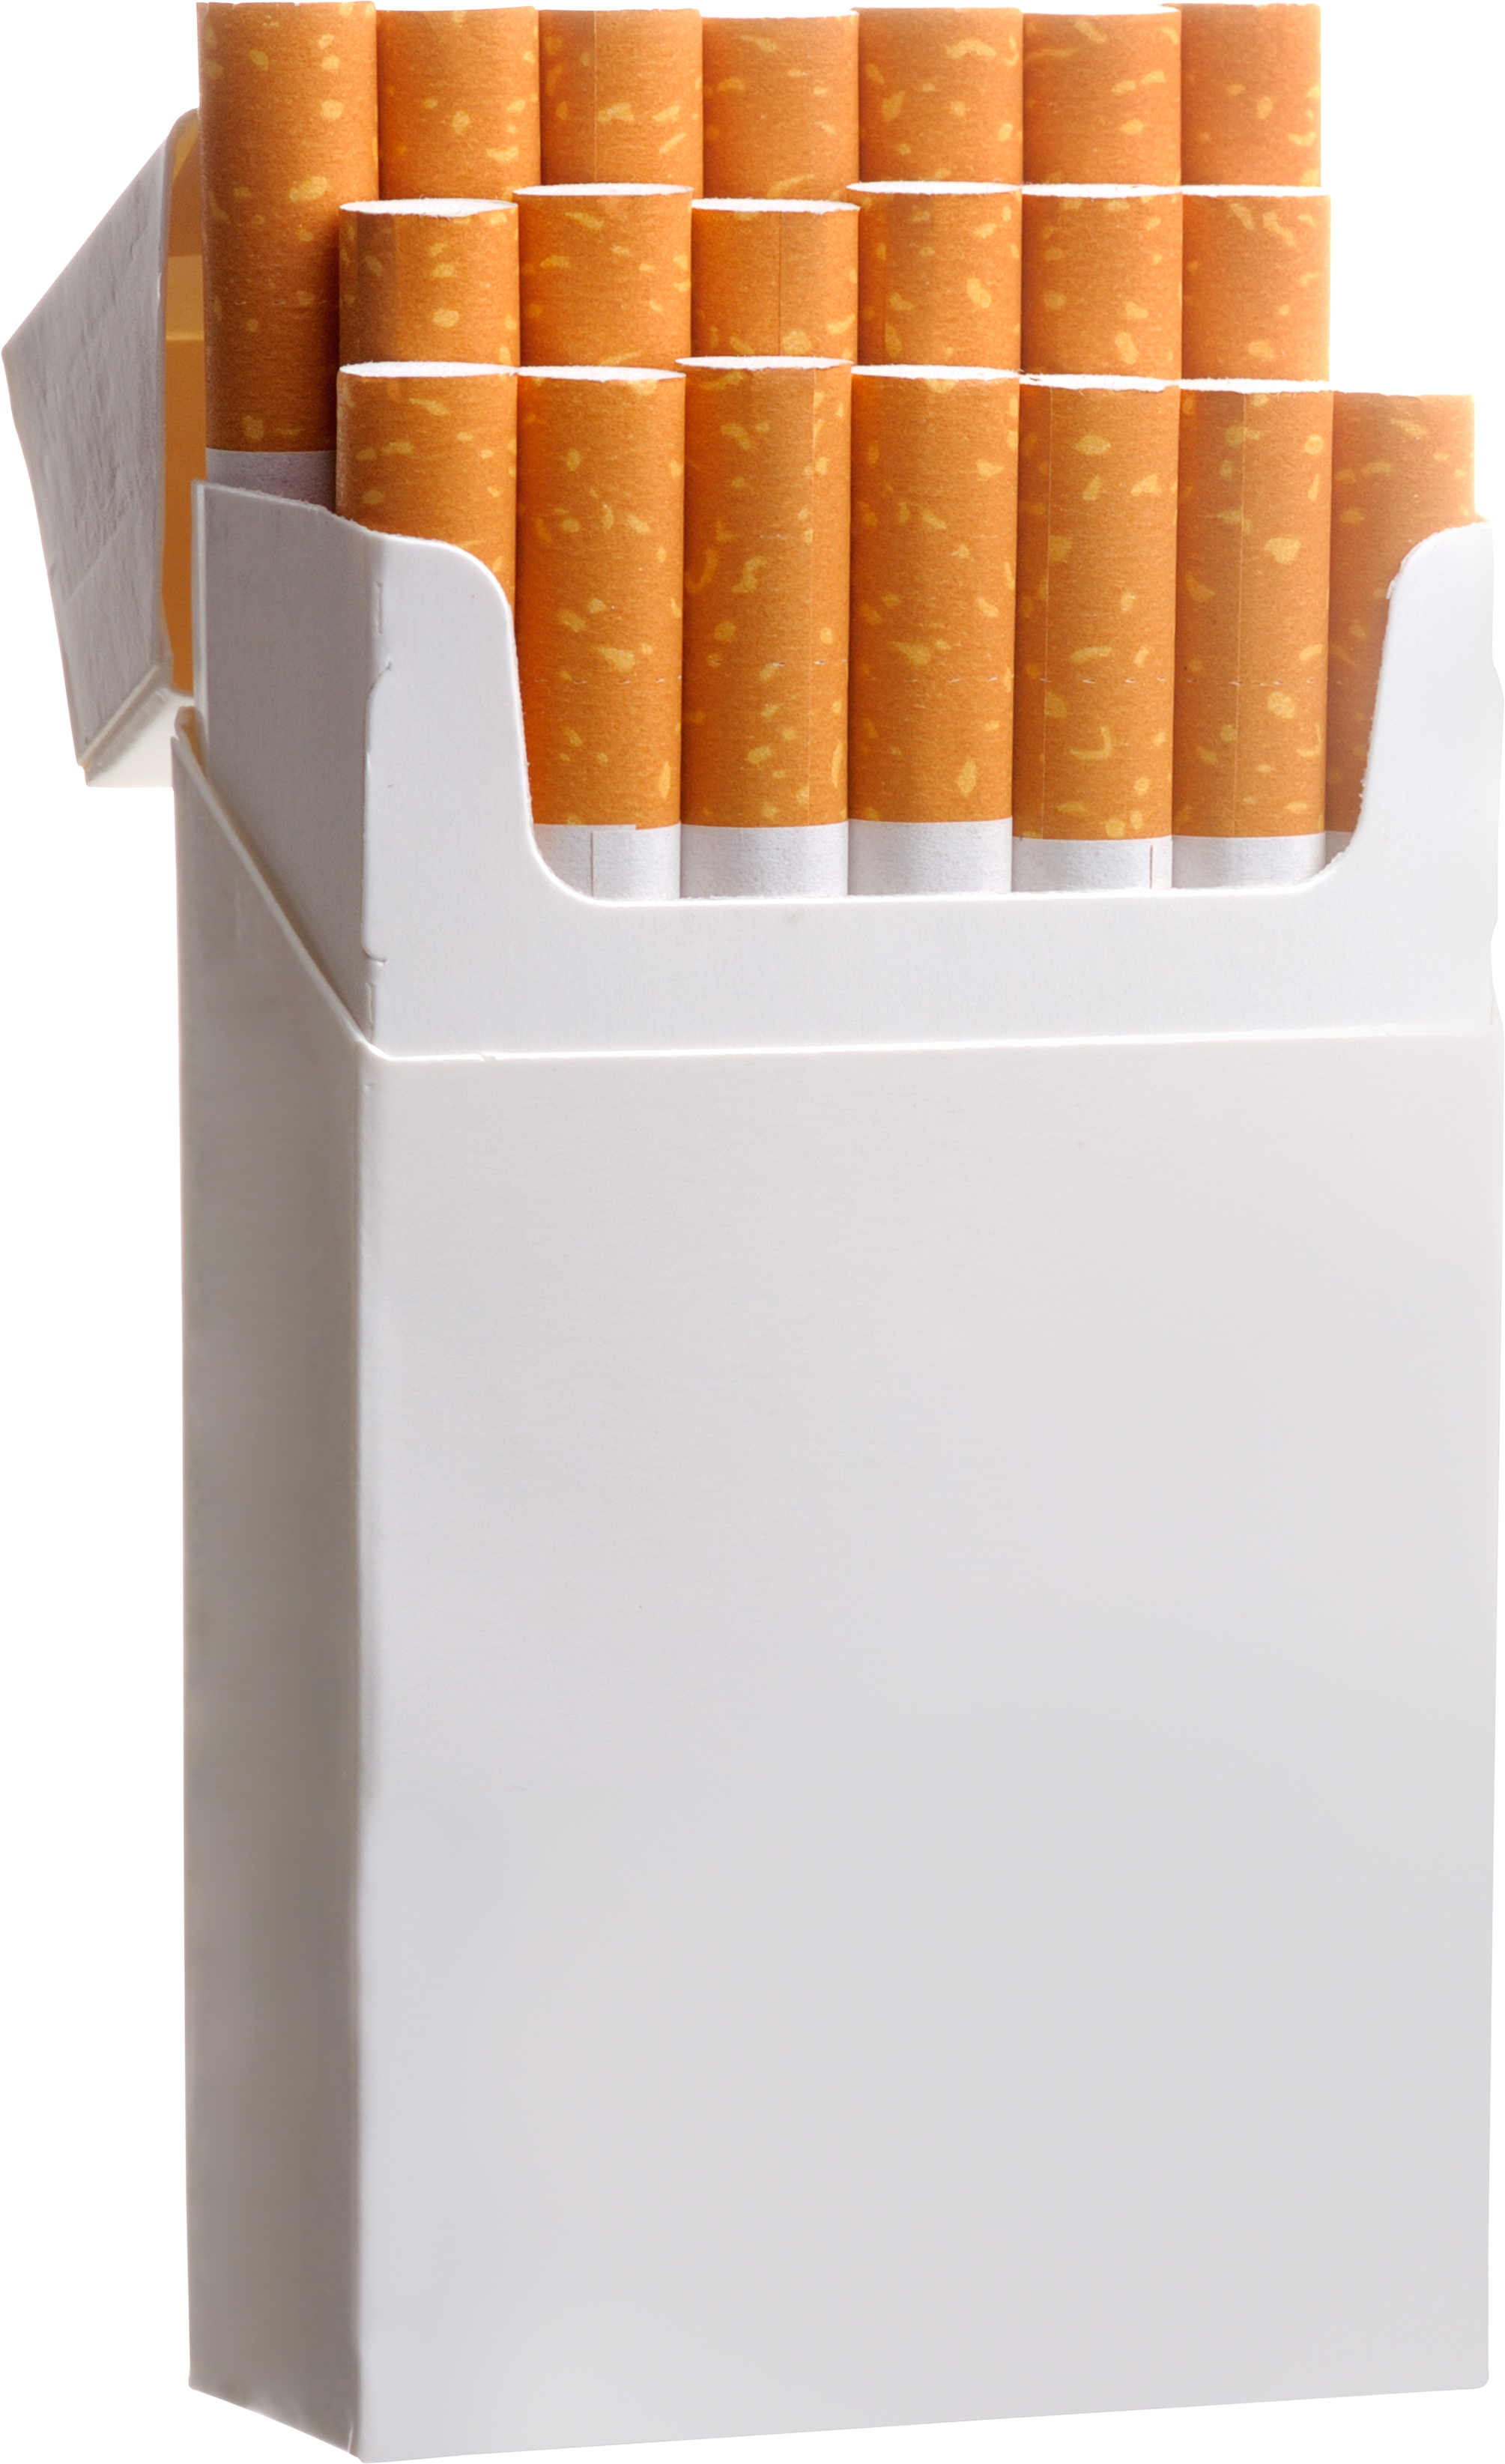 Un paquet de cigarettes